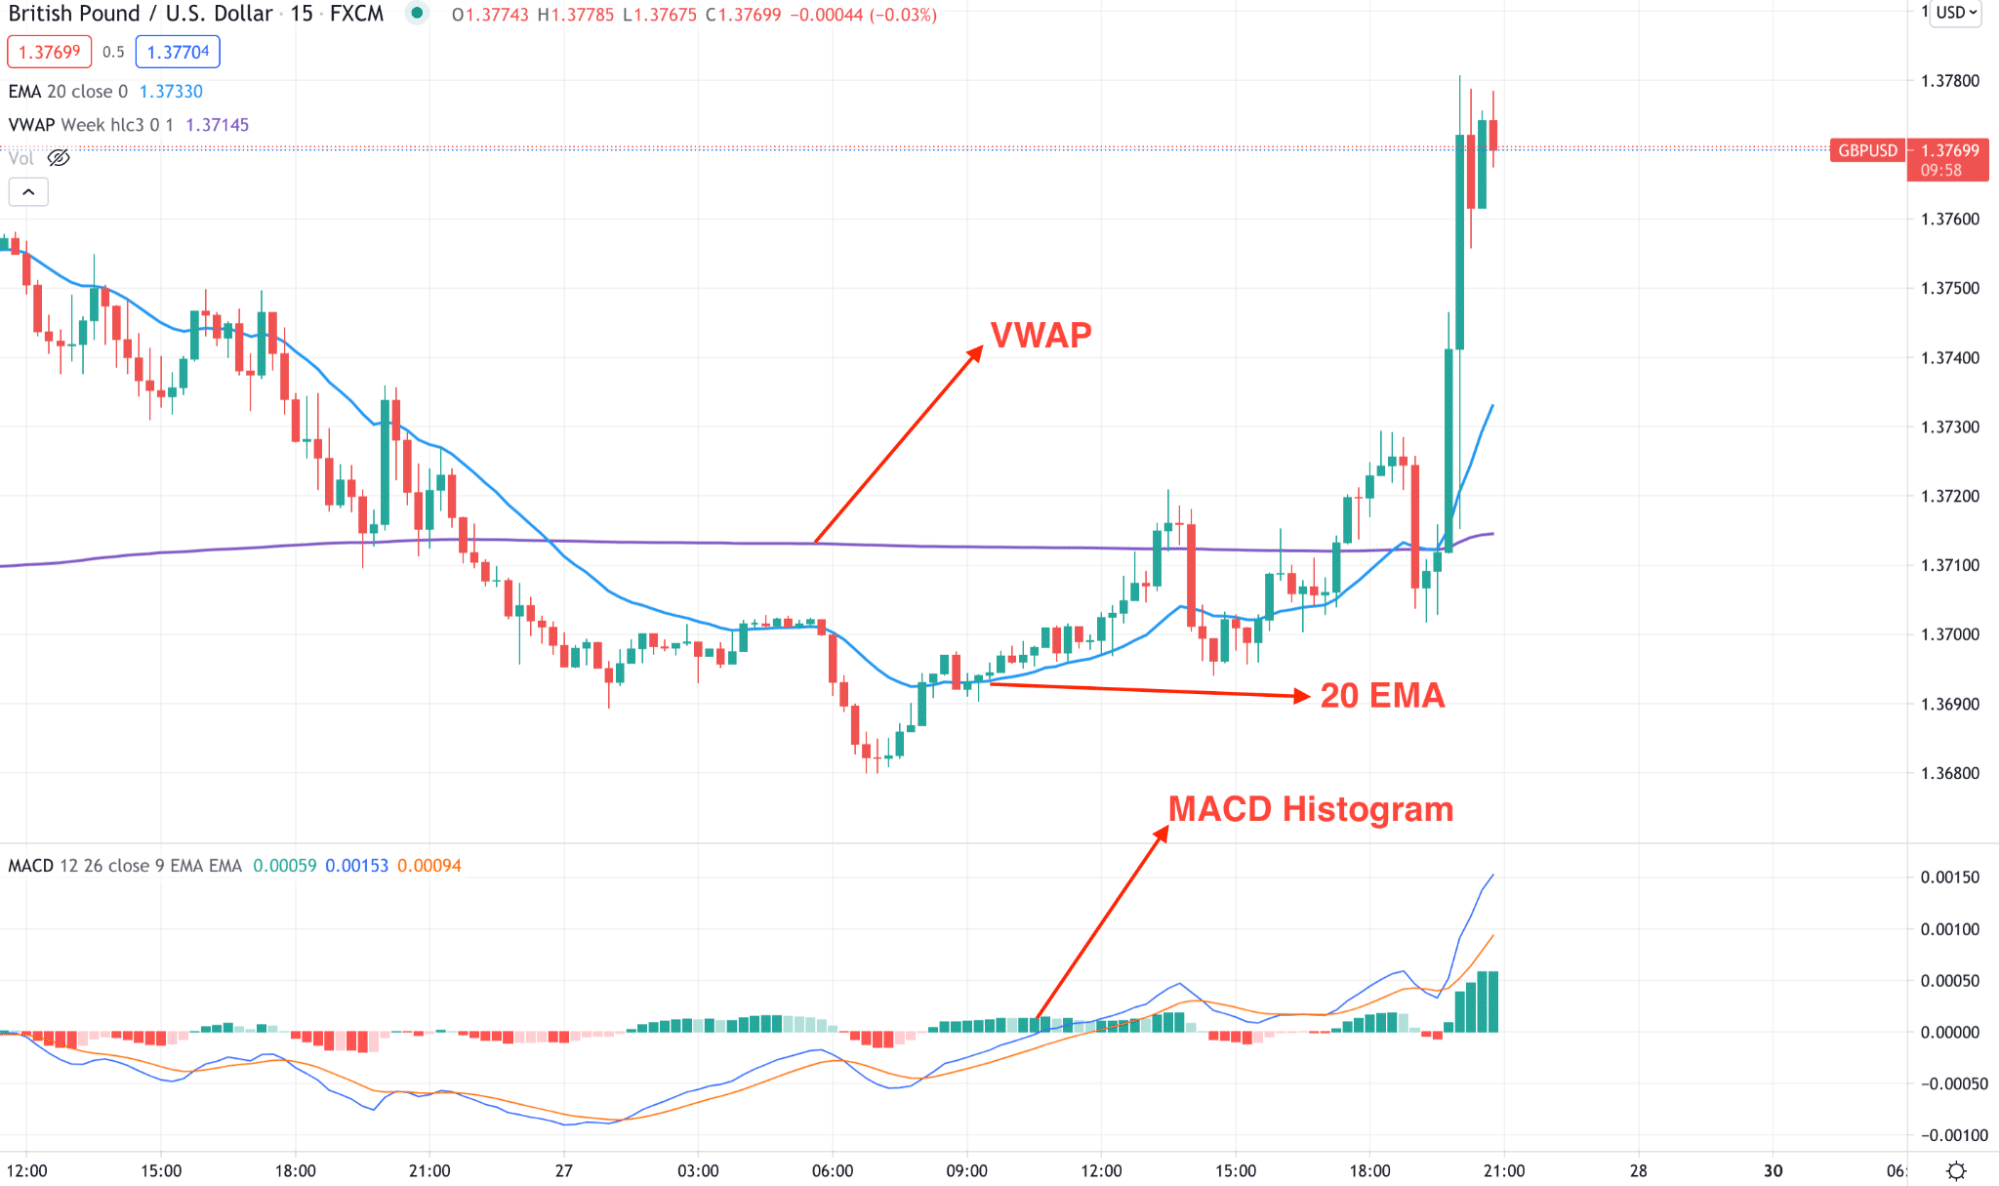 GBP/USD 15M chart